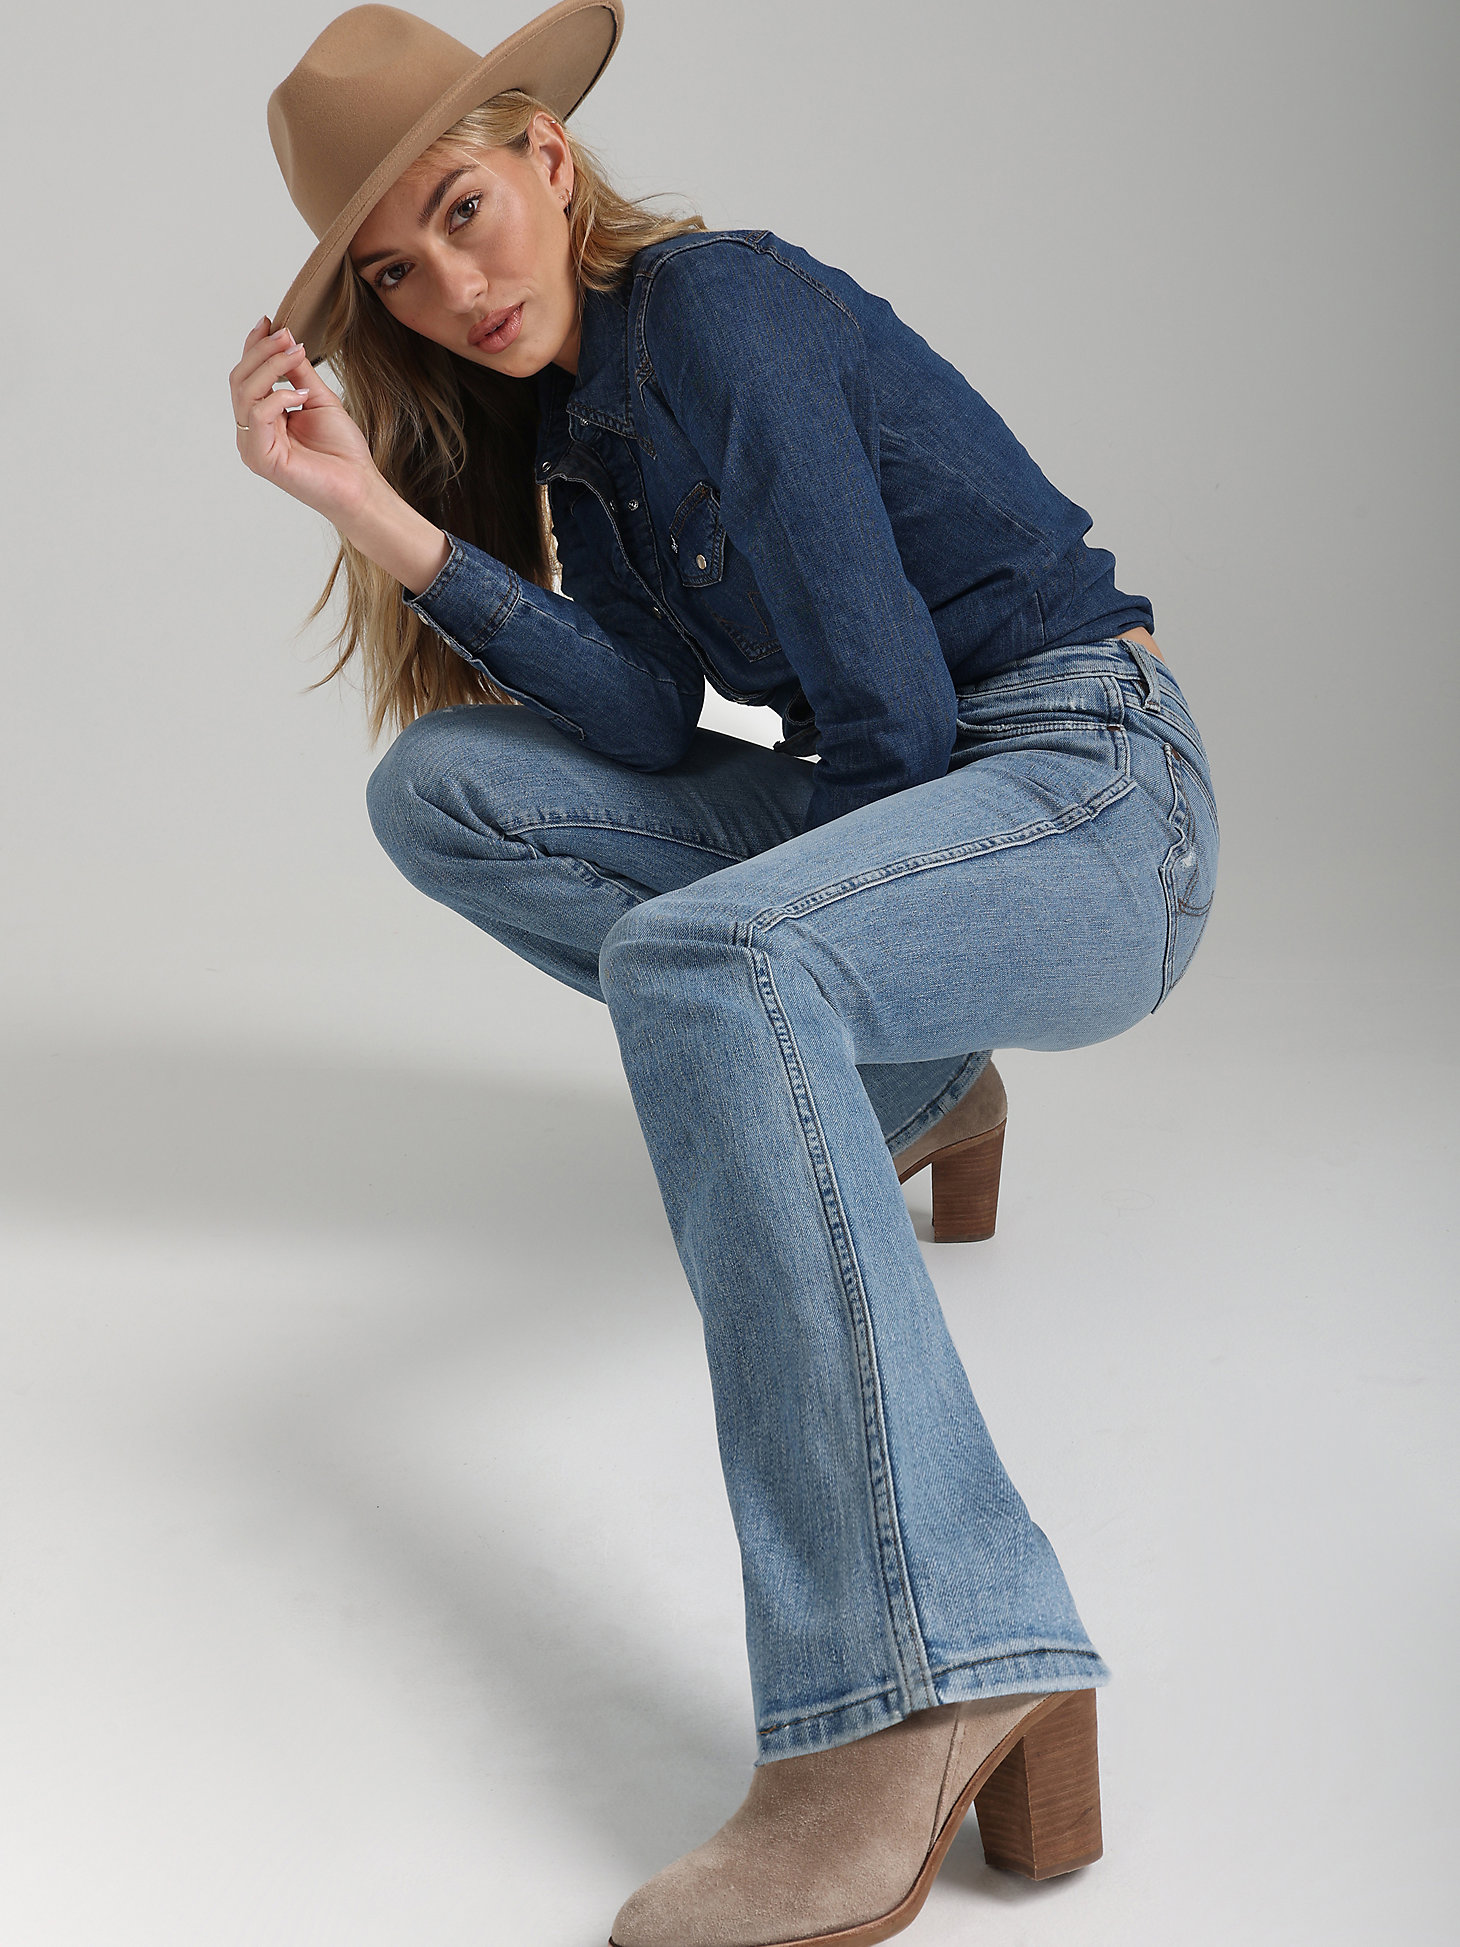 Wrangler Retro® Green Jean: Women's High Rise Slim Boot in Germaine alternative view 1